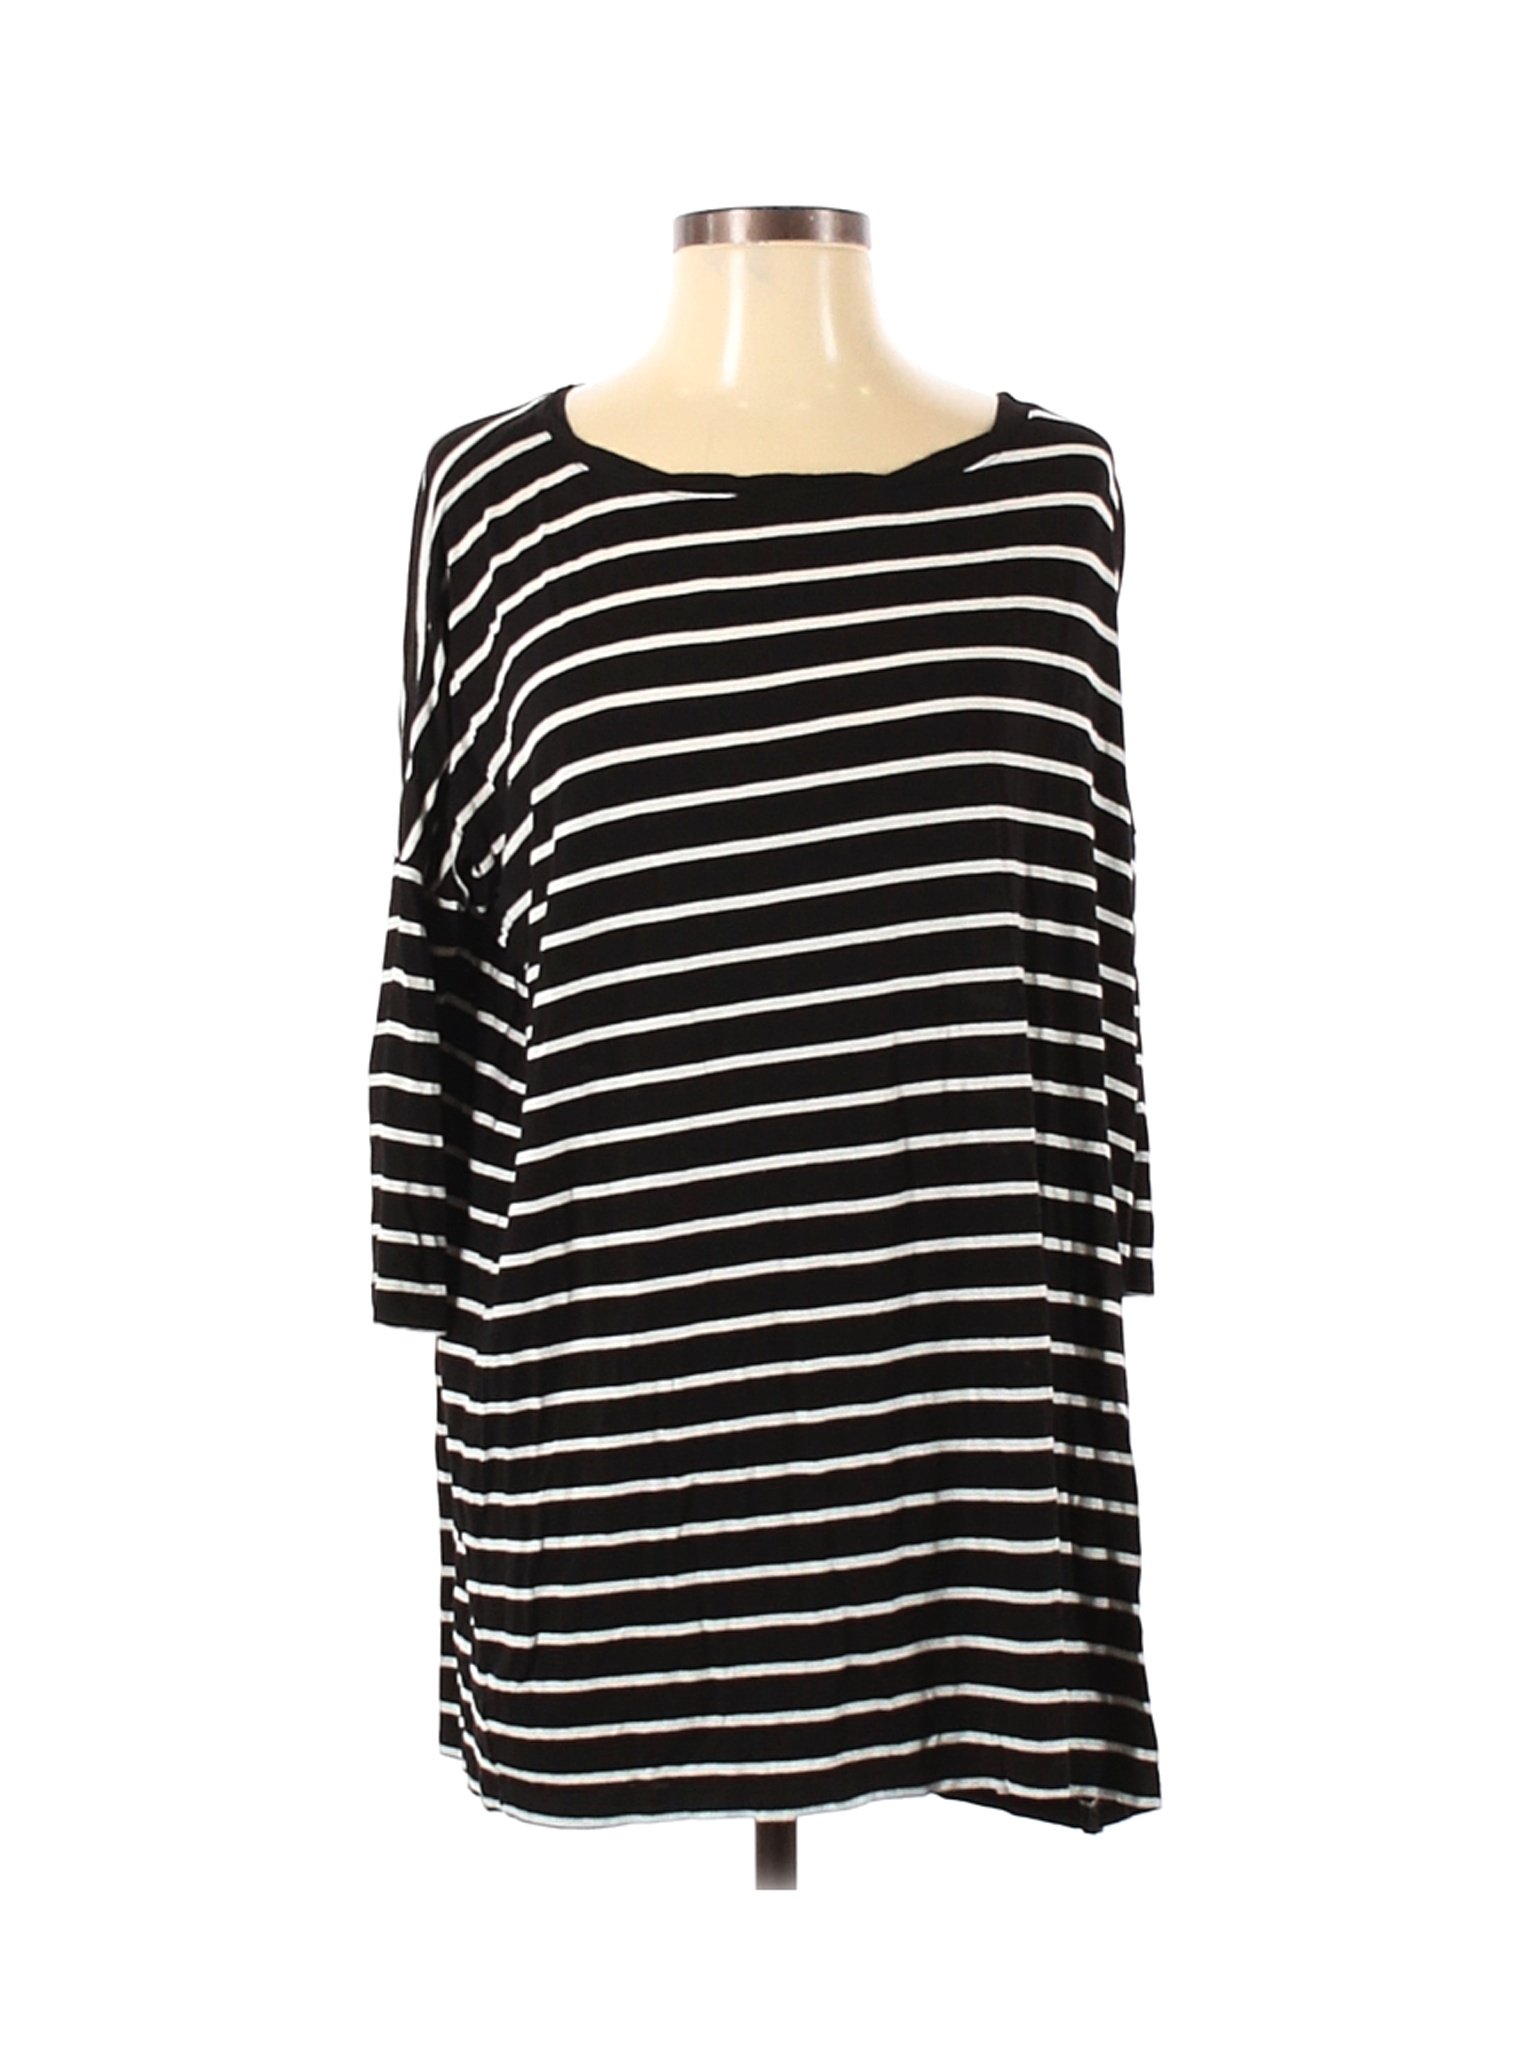 H&M Women Black 3/4 Sleeve T-Shirt S | eBay